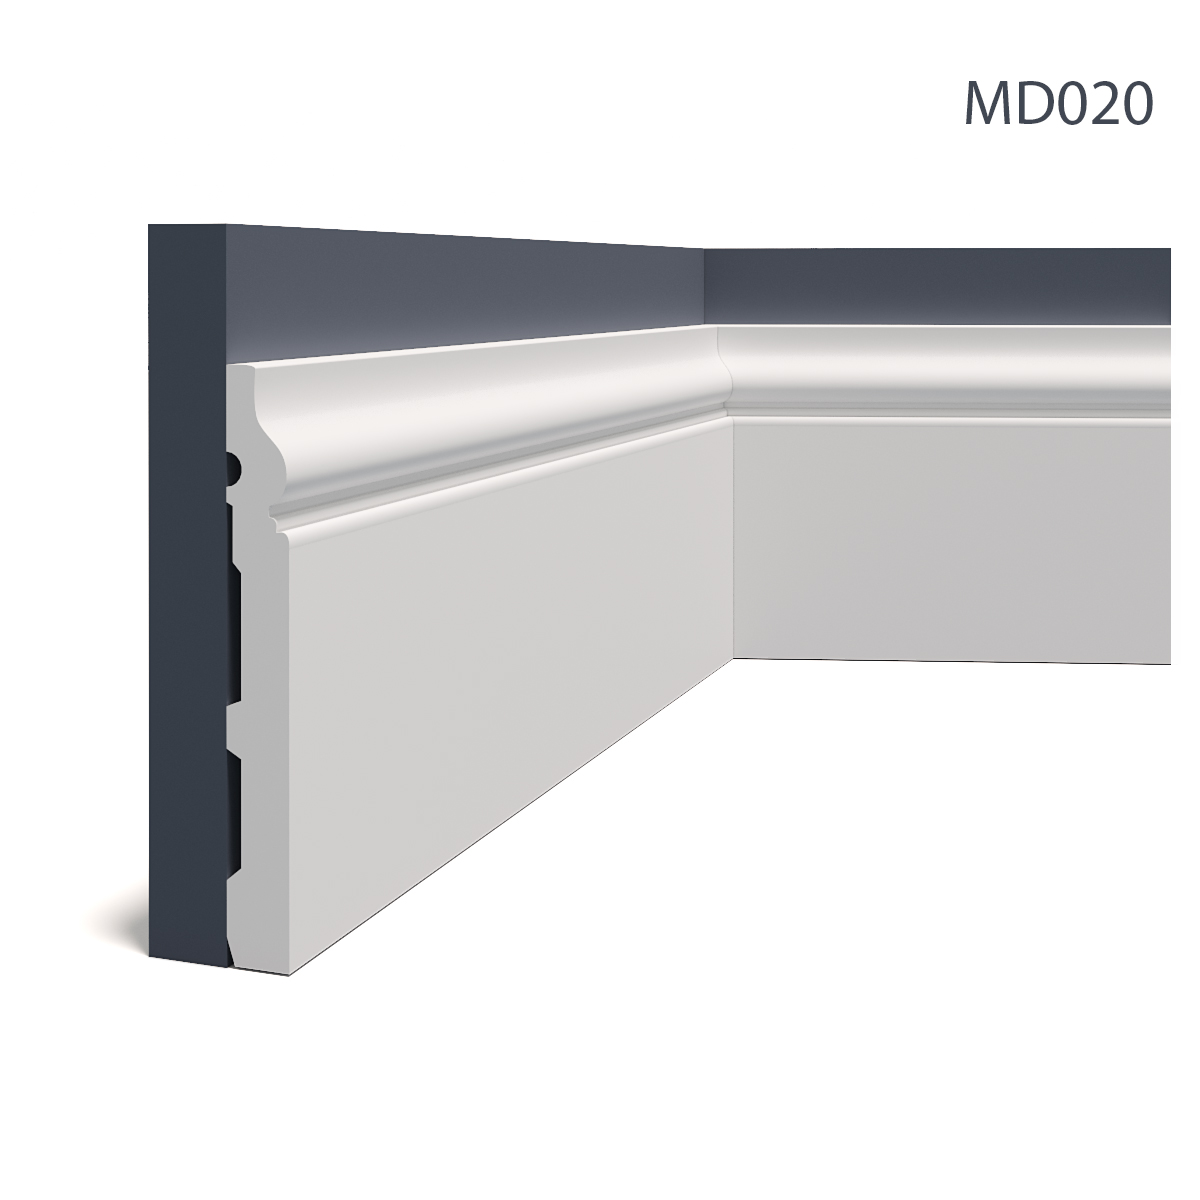 Plinte decorative Mardom Decor MRD-MD020P, material: PolyForce, SupremeSatin